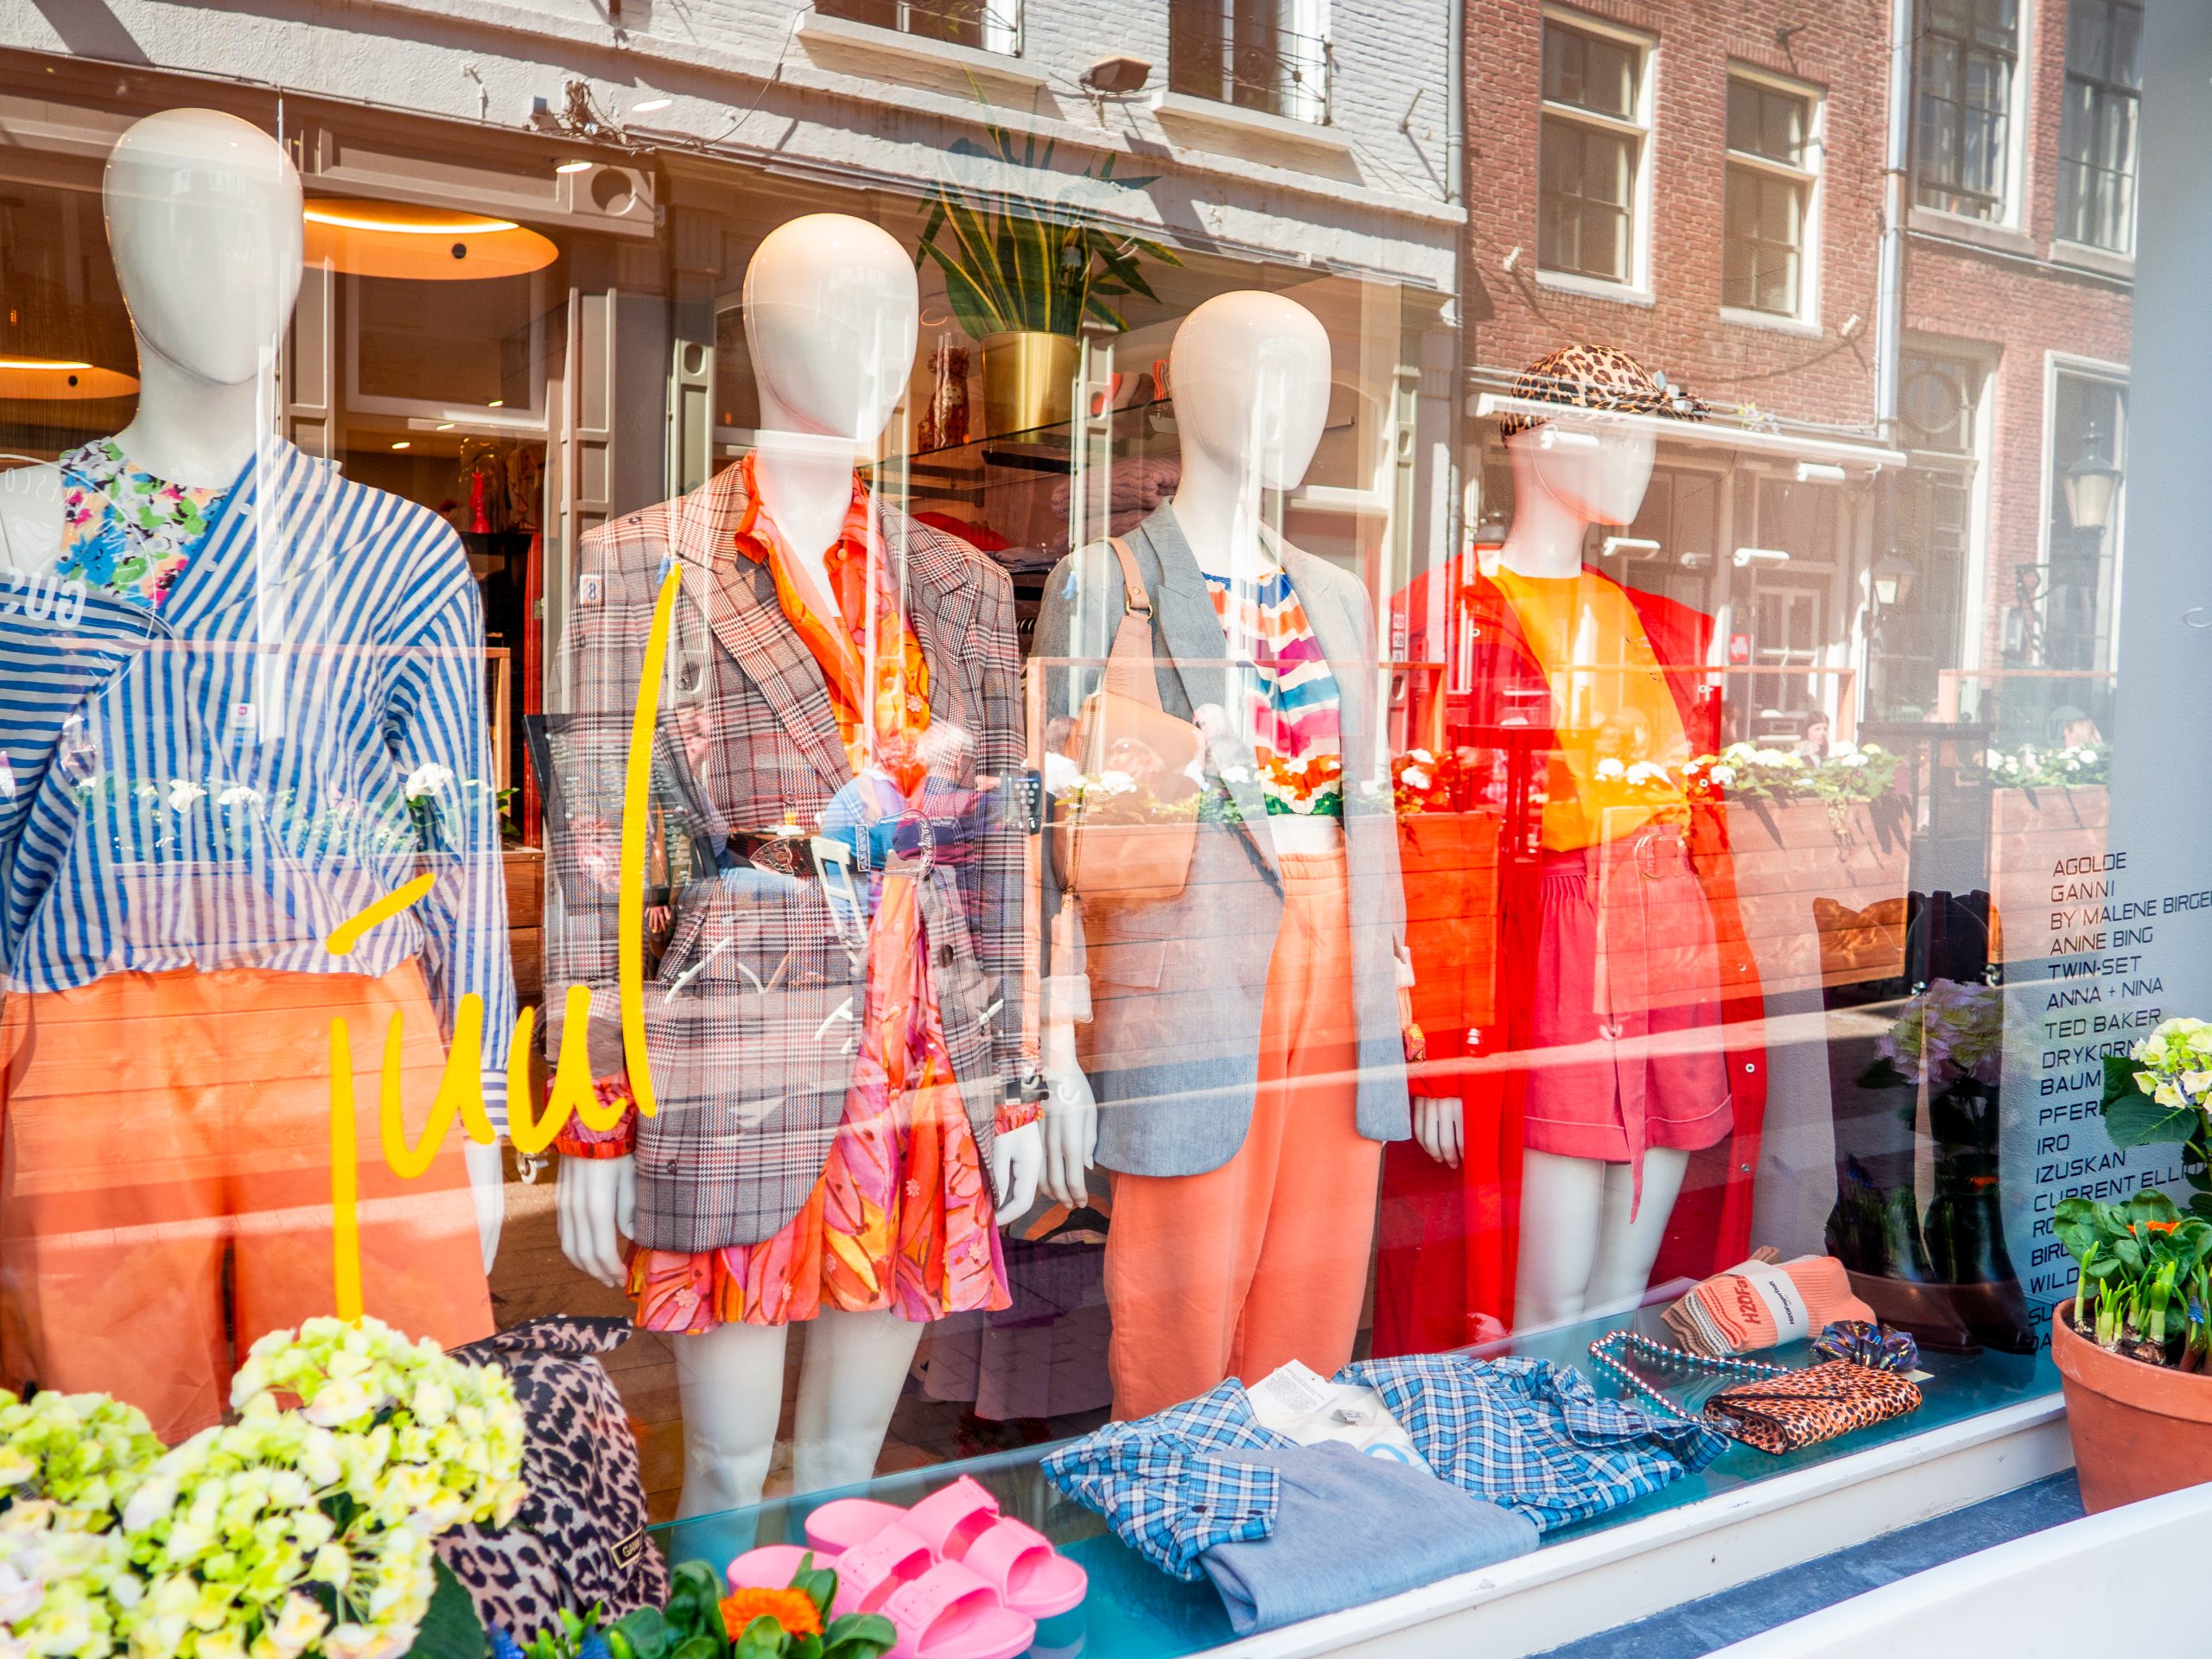 Catastrofaal Beukende Populair shoproute: 10x leuk kleding shoppen in Den Bosch